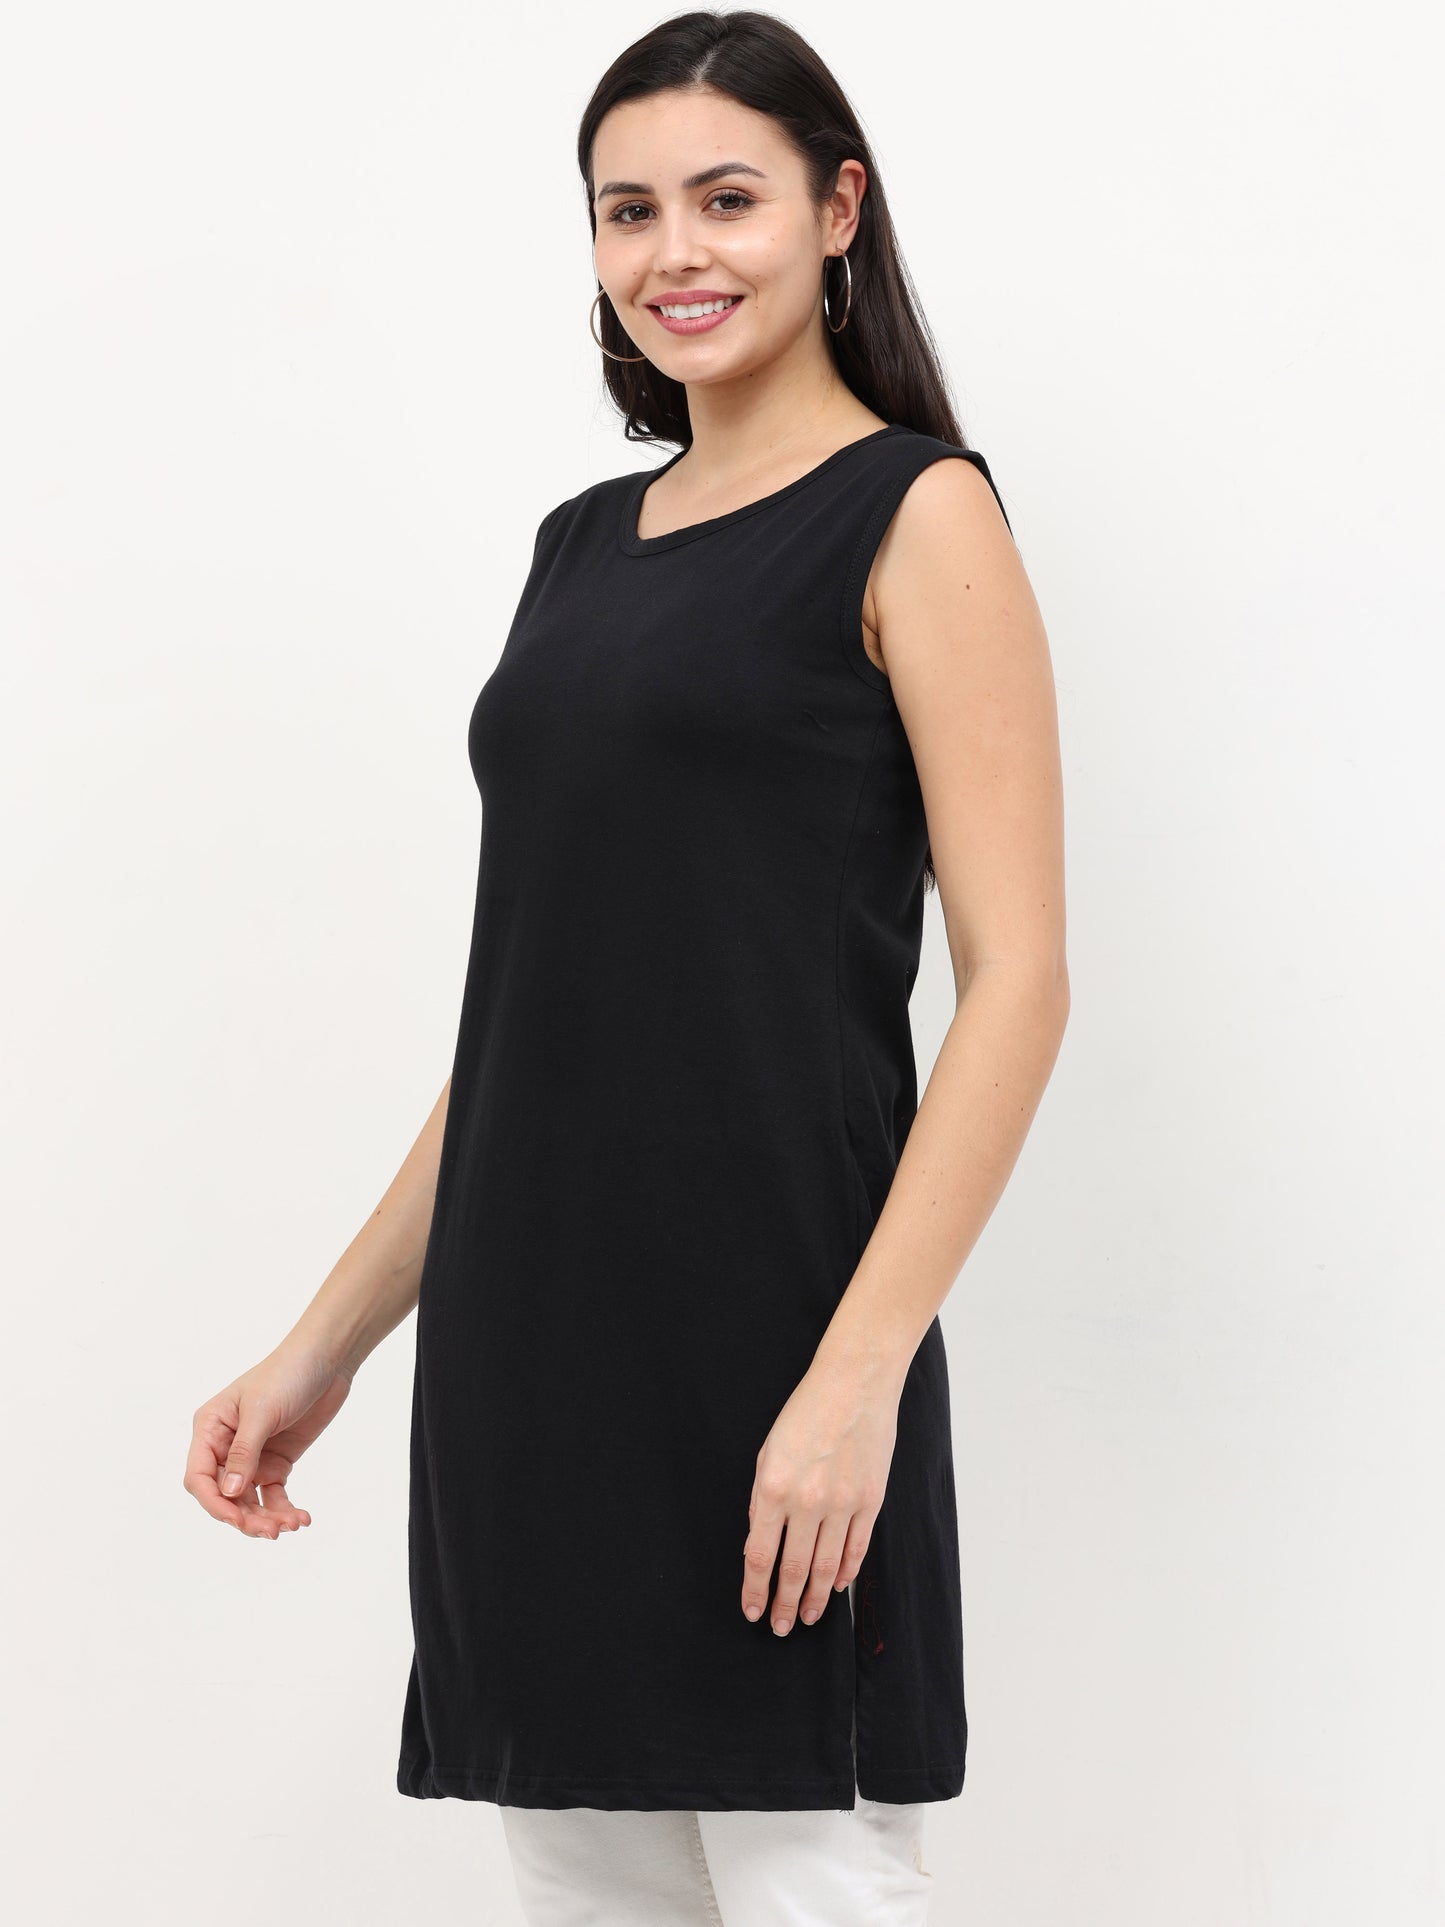 Women's Cotton Round Neck Plain Black Color Sleeveless Long Top